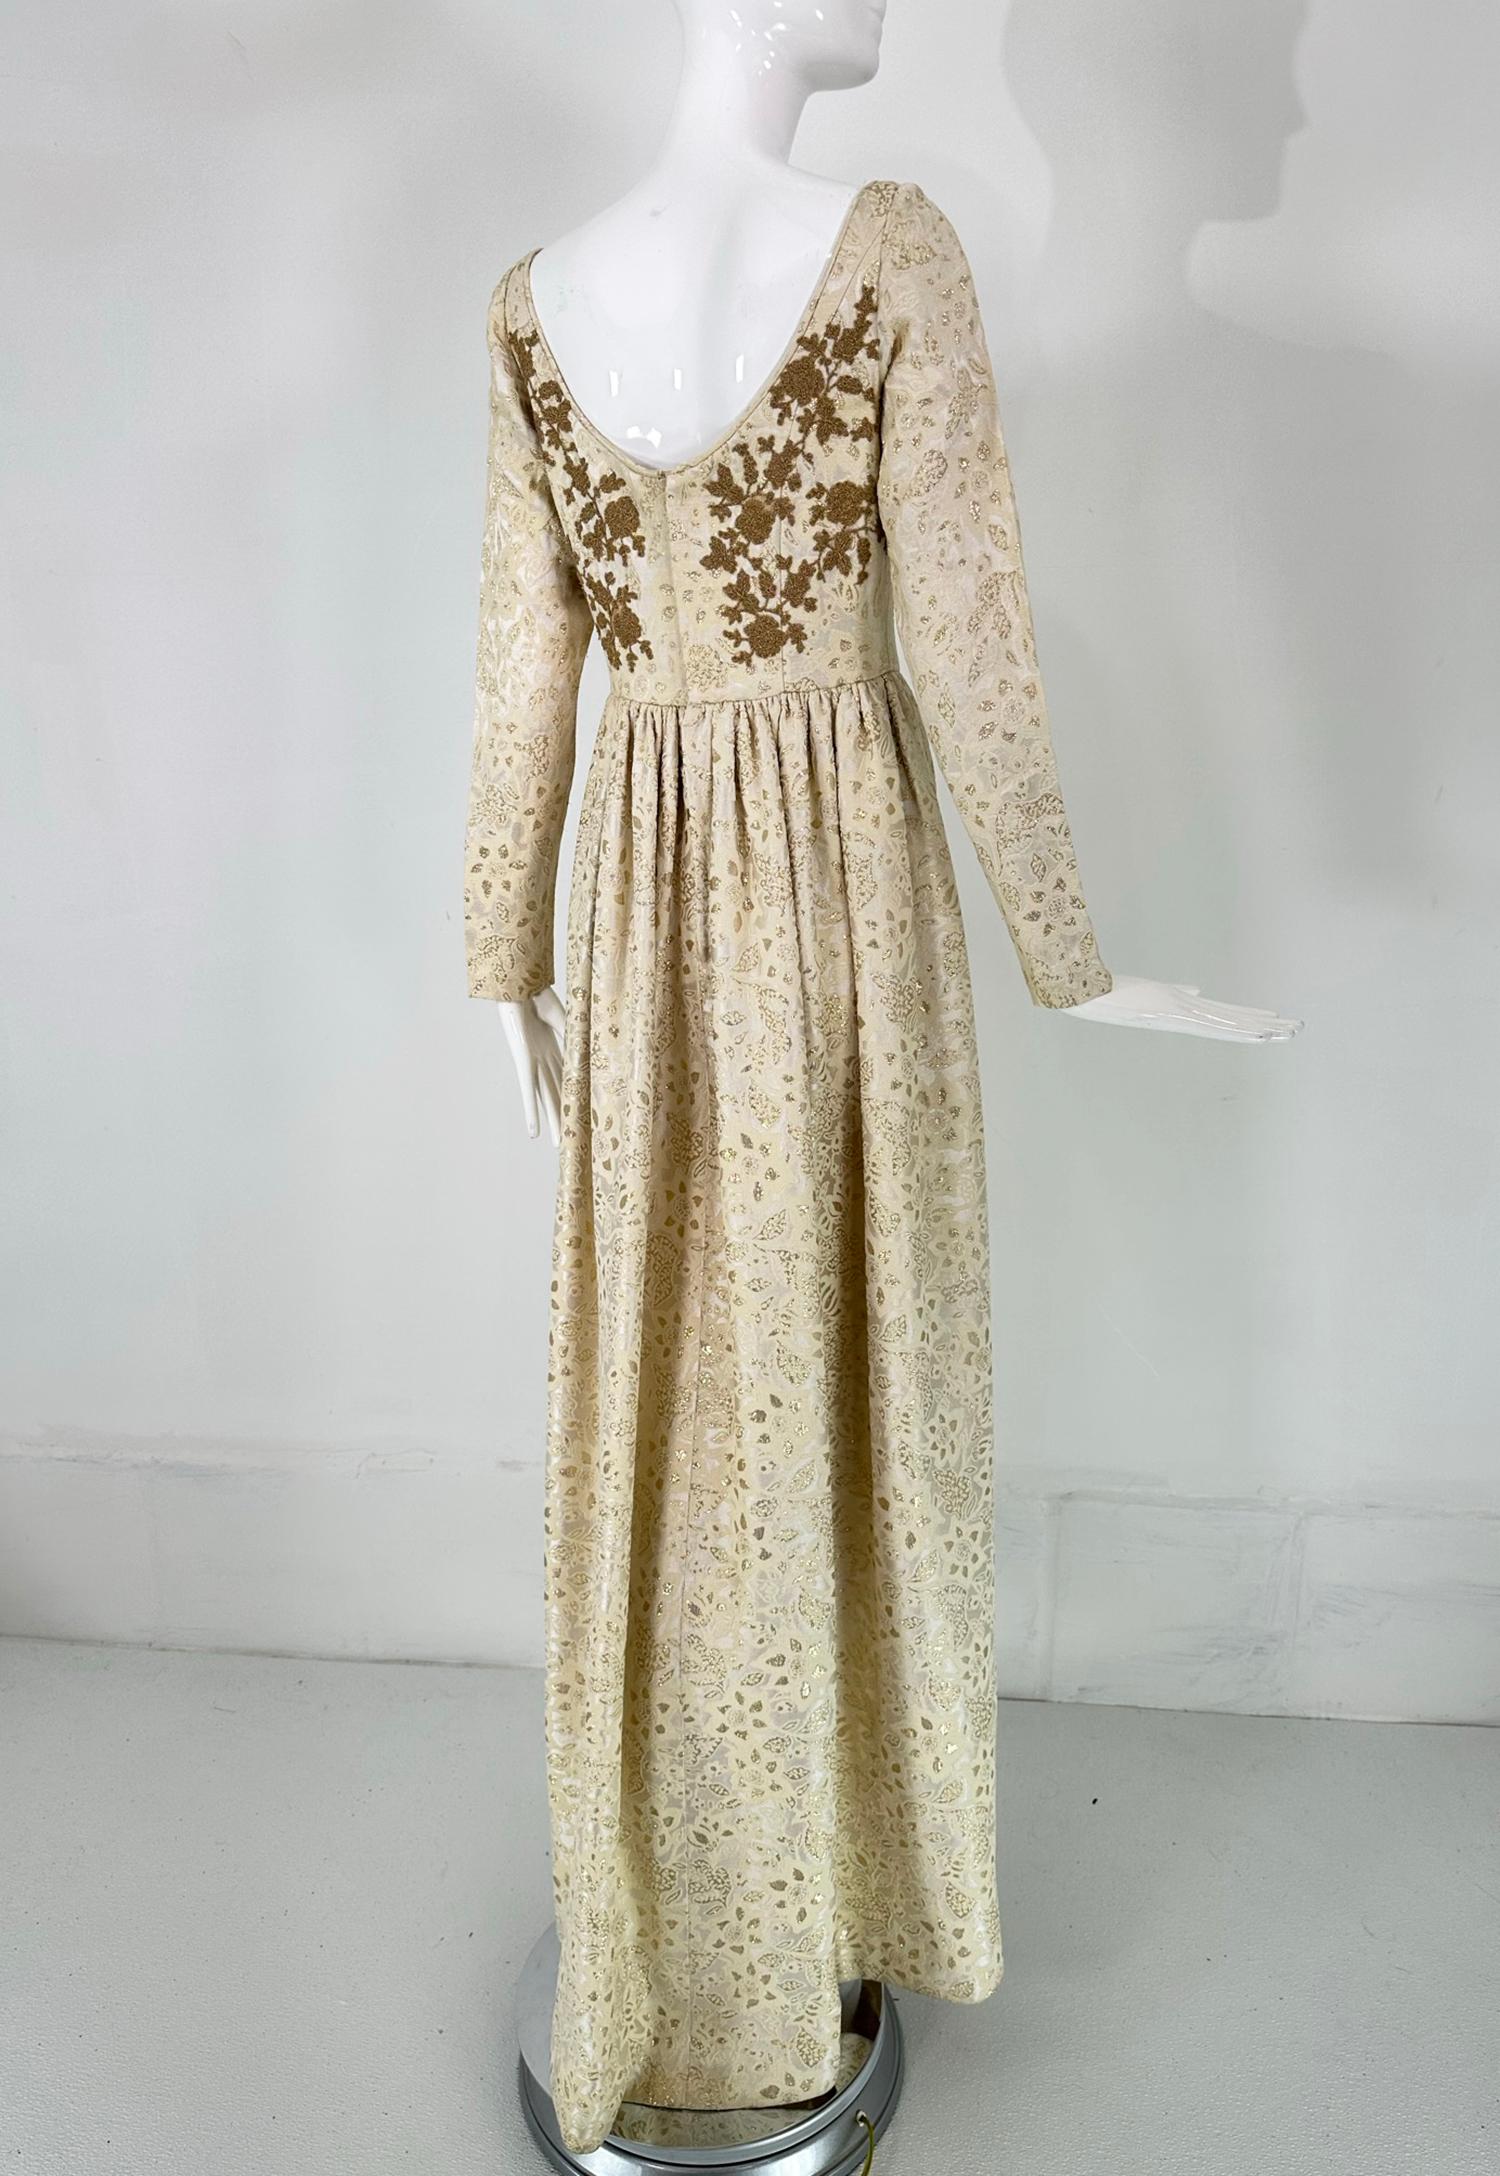 Galitizne Couture Renaissance Style Gown in Cream & Gold Metallic Brocade 1970s For Sale 3